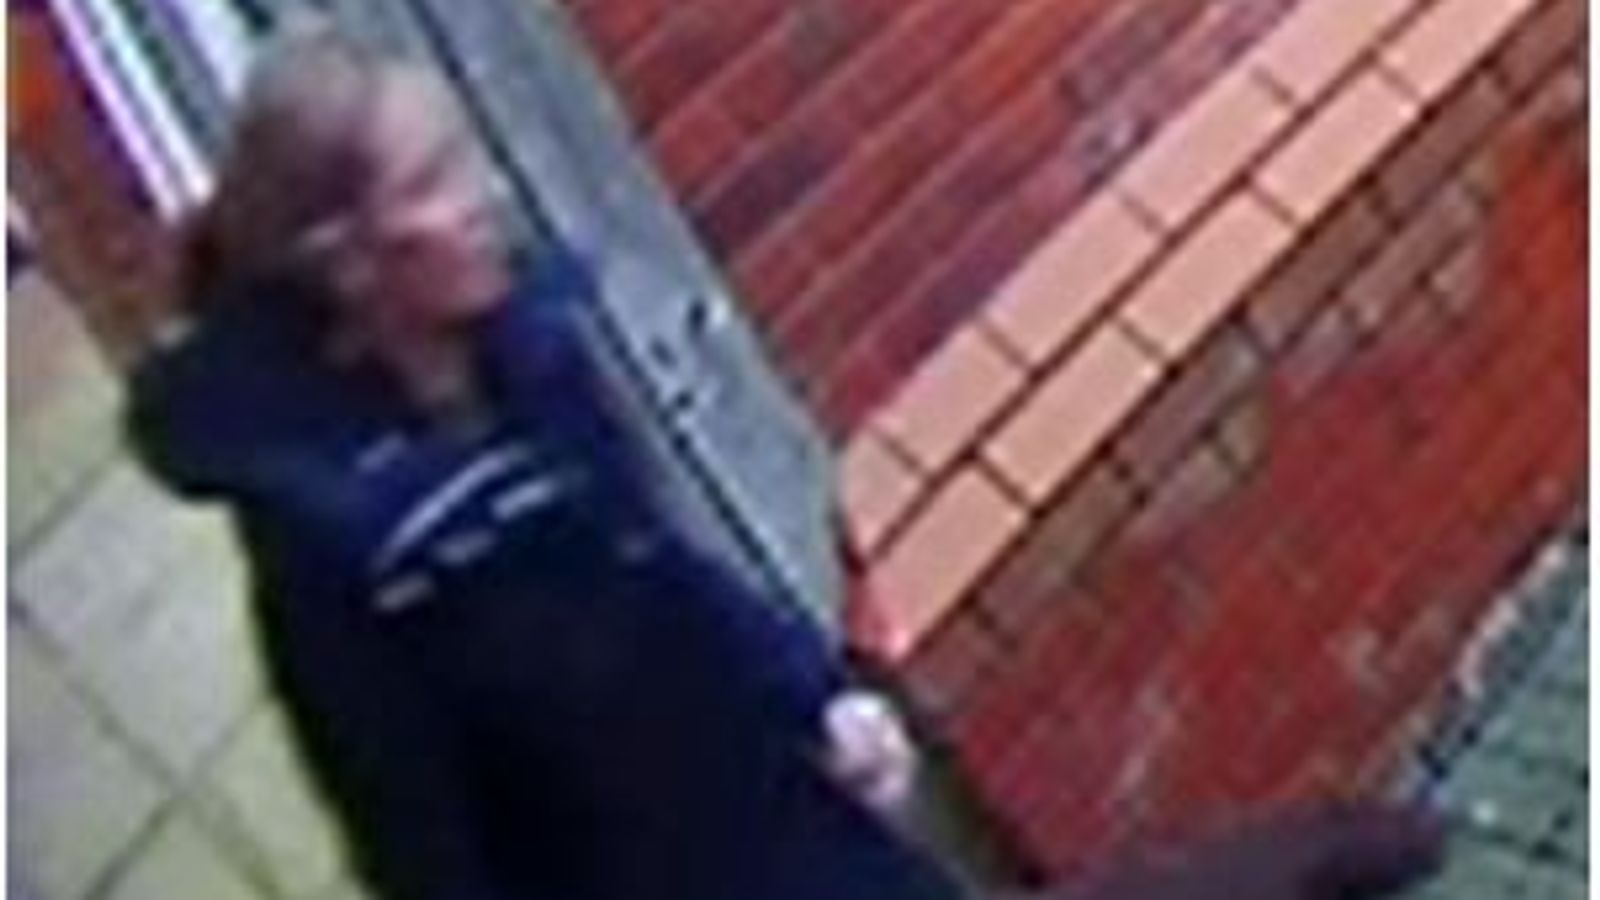 Nicola Bulley's partner Paul Ansell reveals heartbreak as new CCTV still released